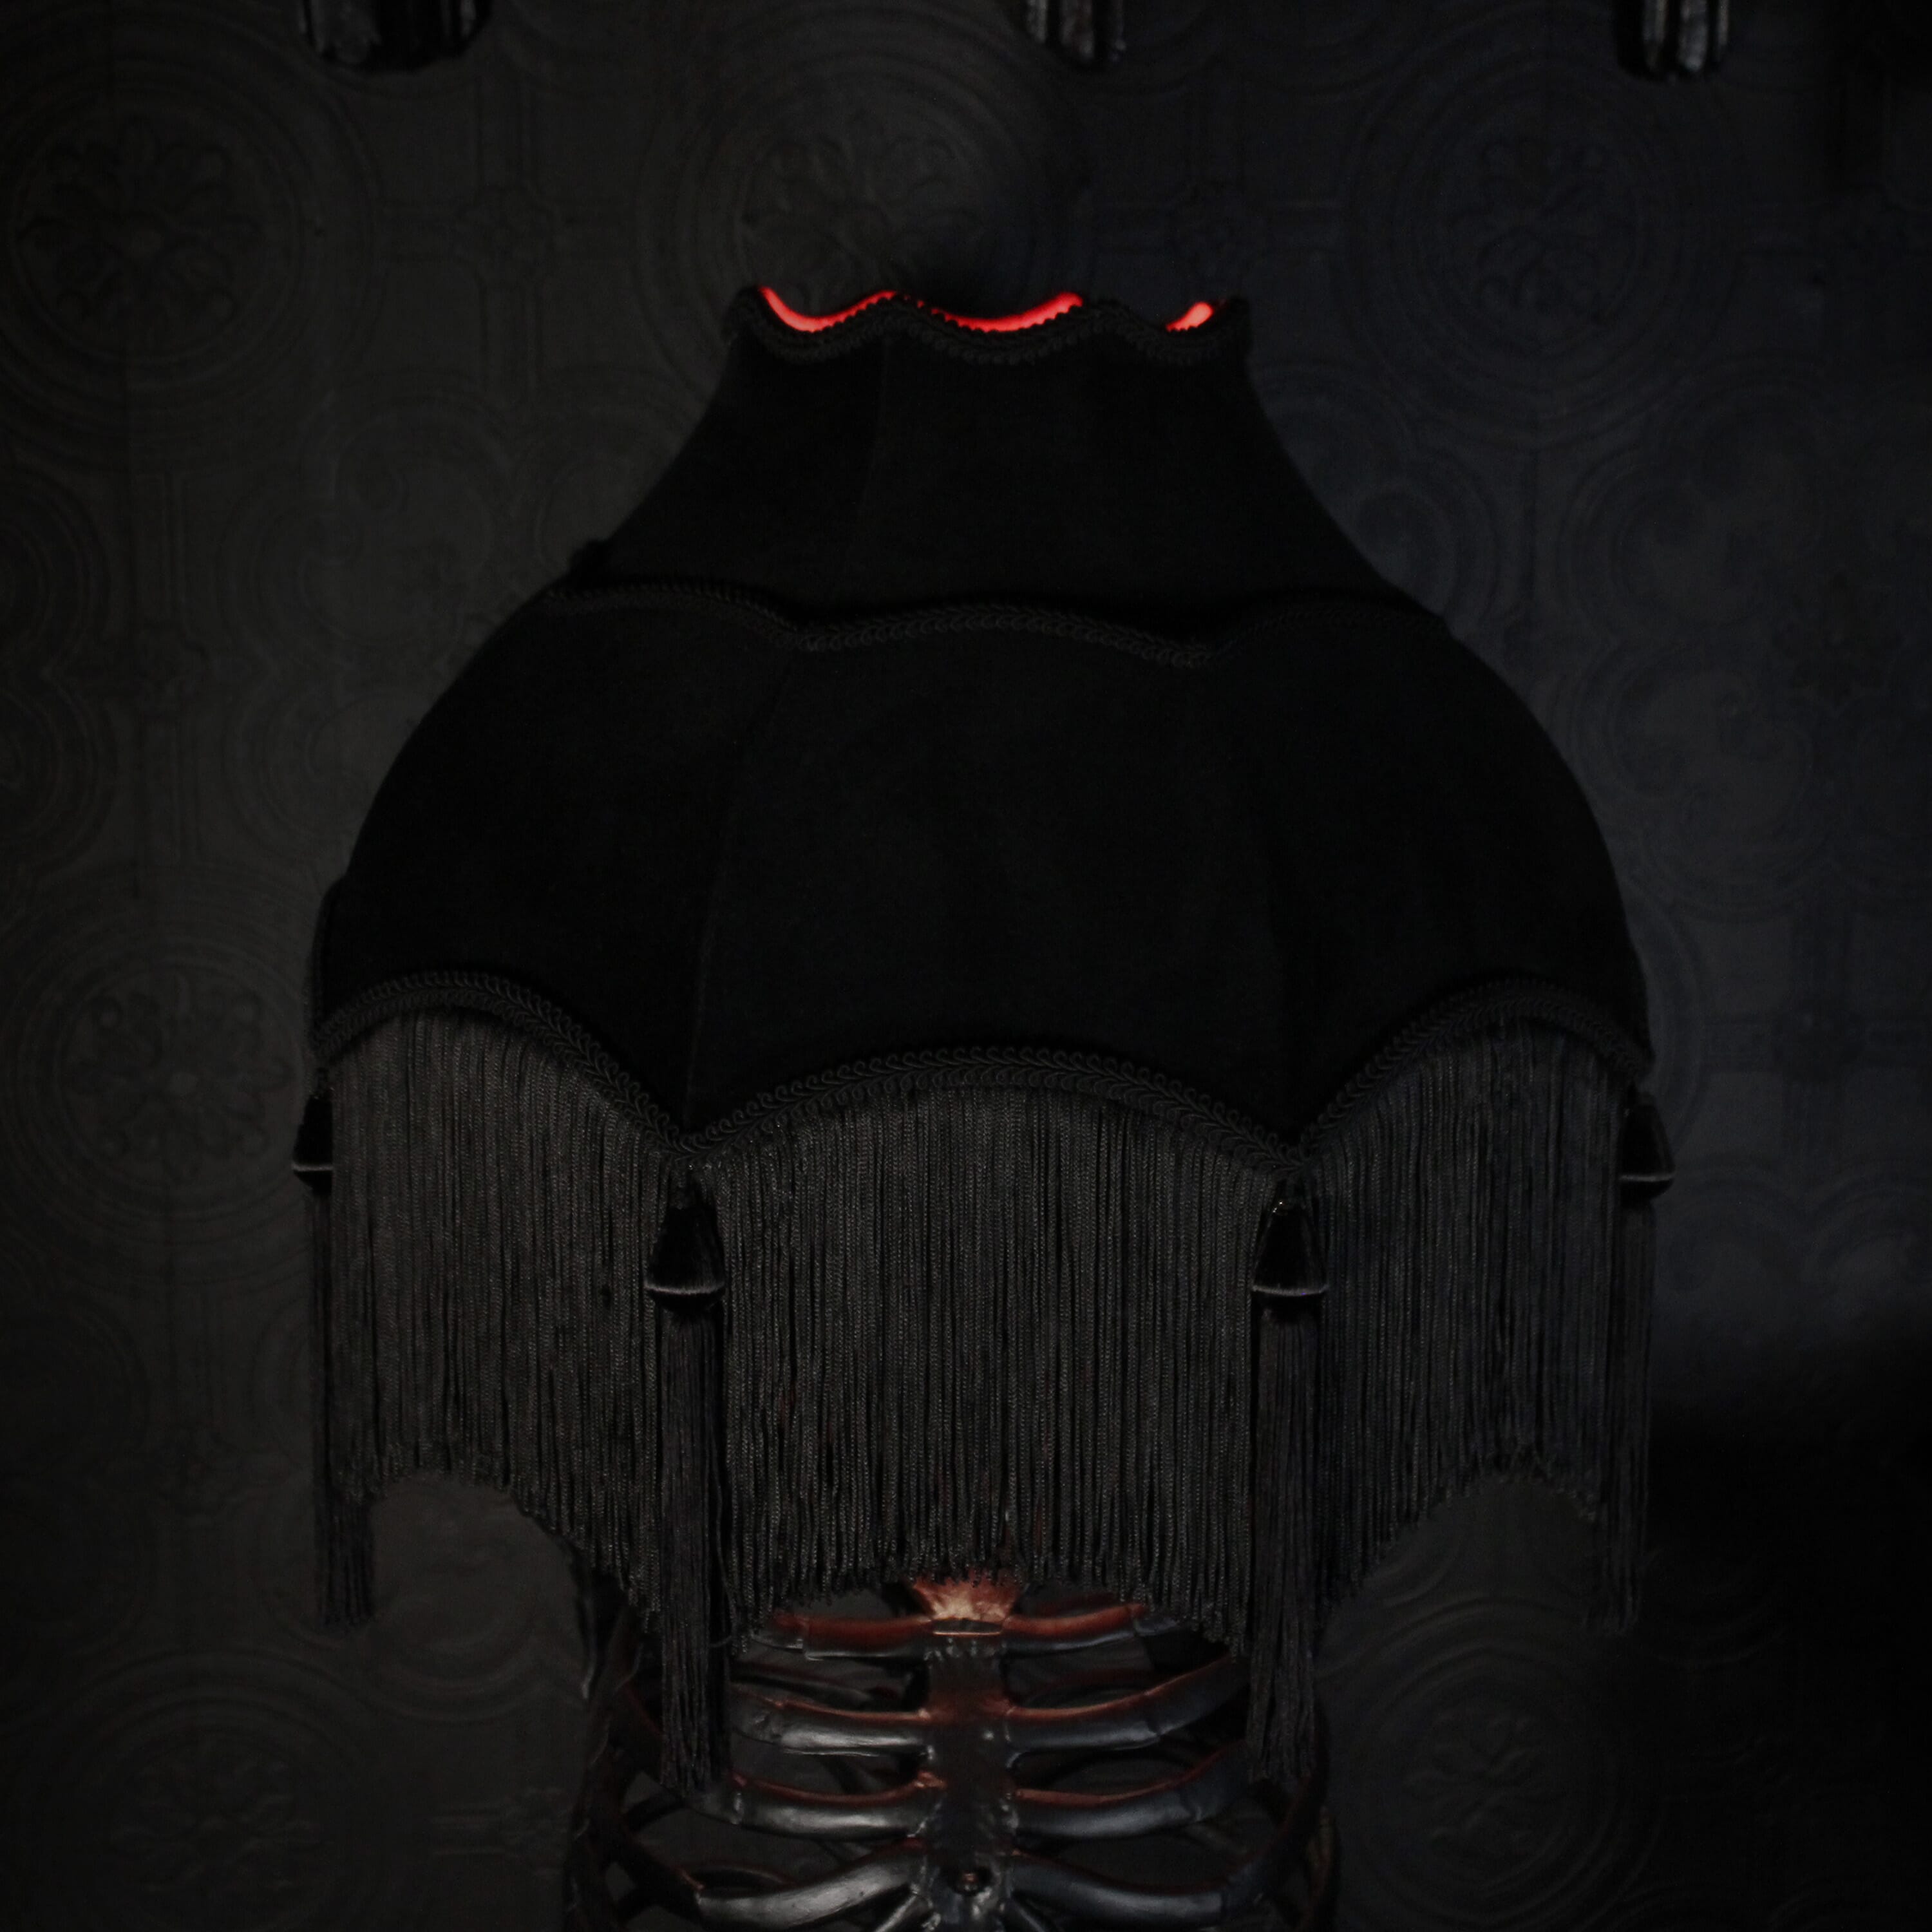 The Skeleton Floor Lamp - Urszula Baroque Edition by The Blackened Teeth